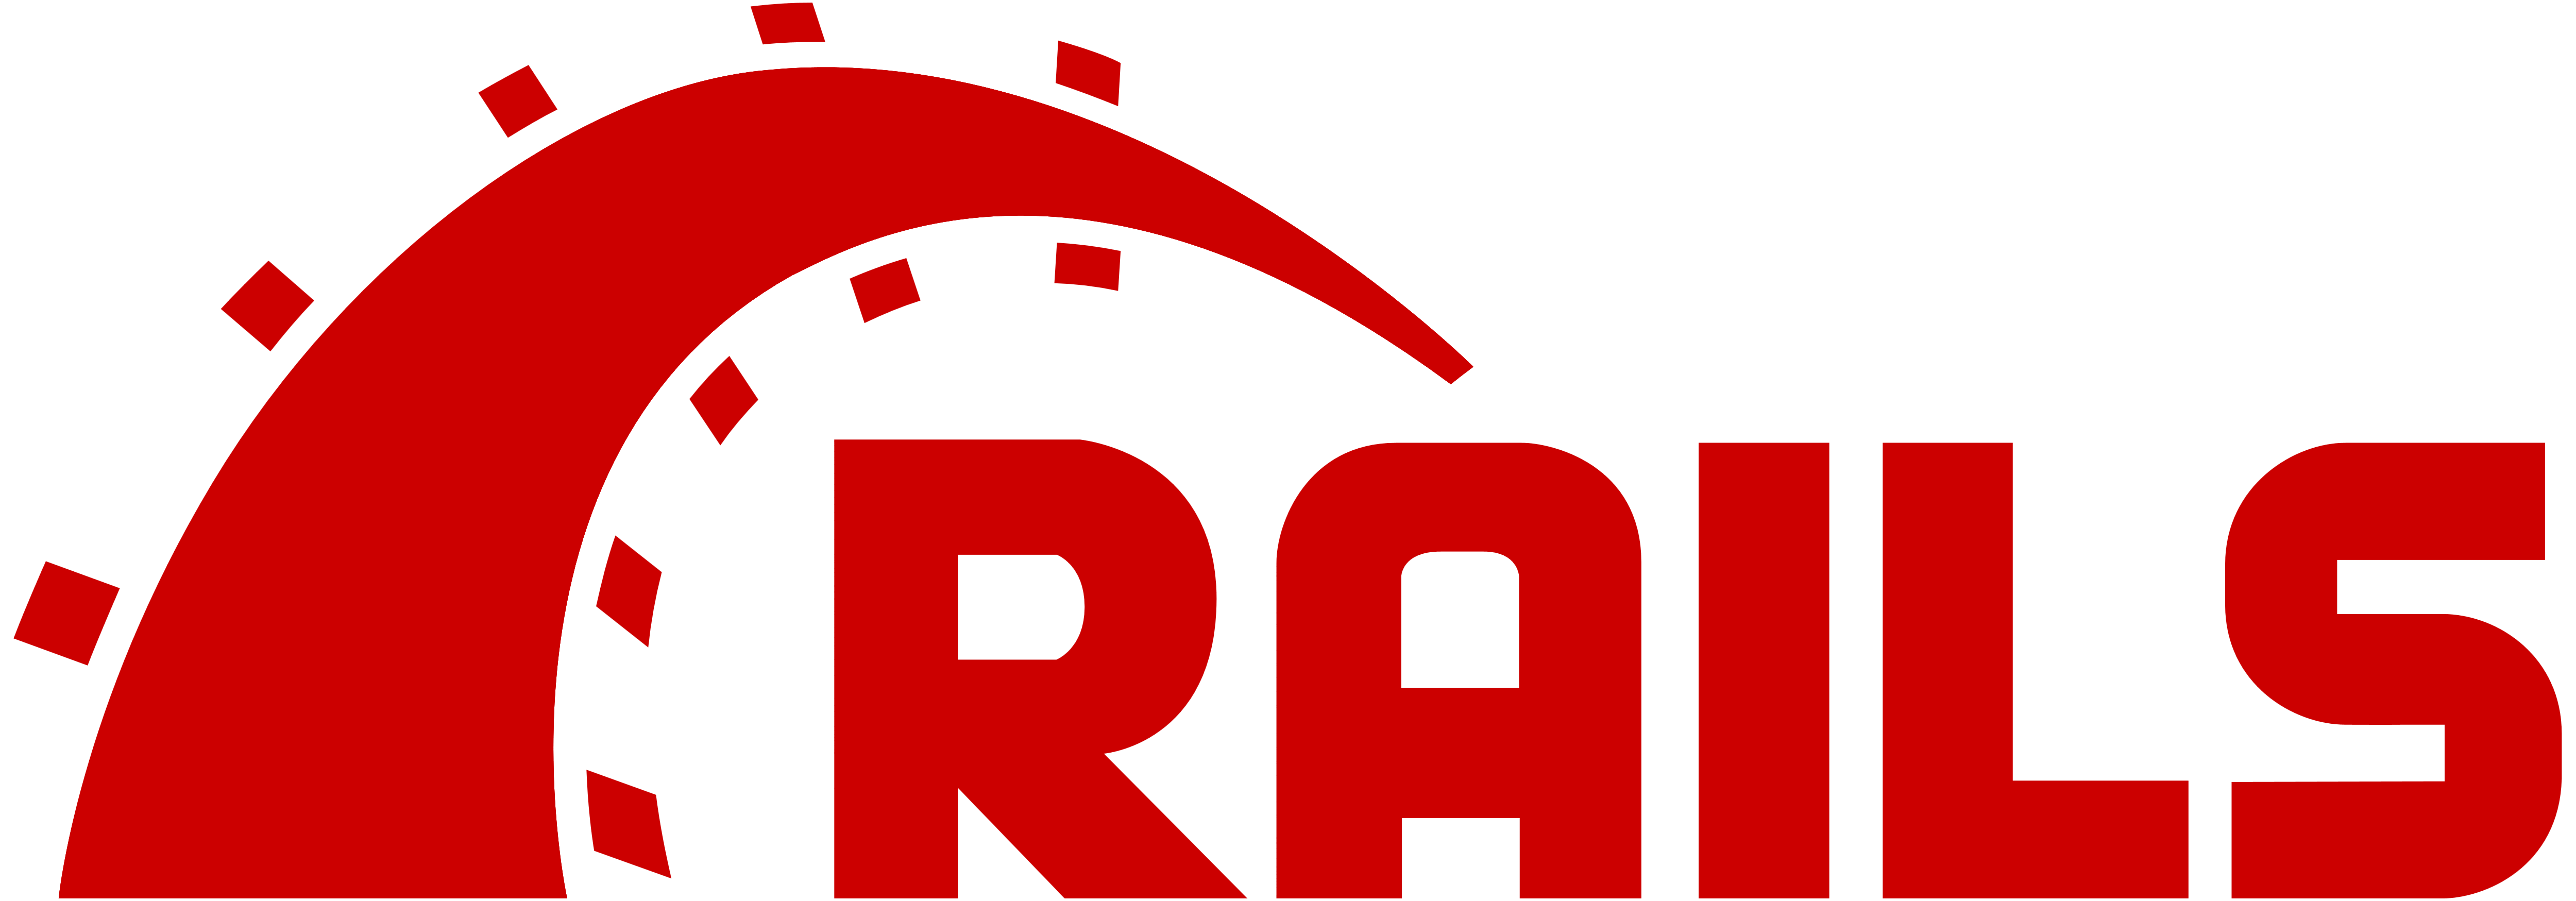 Contrate Desenvolvedor Ruby on Rails